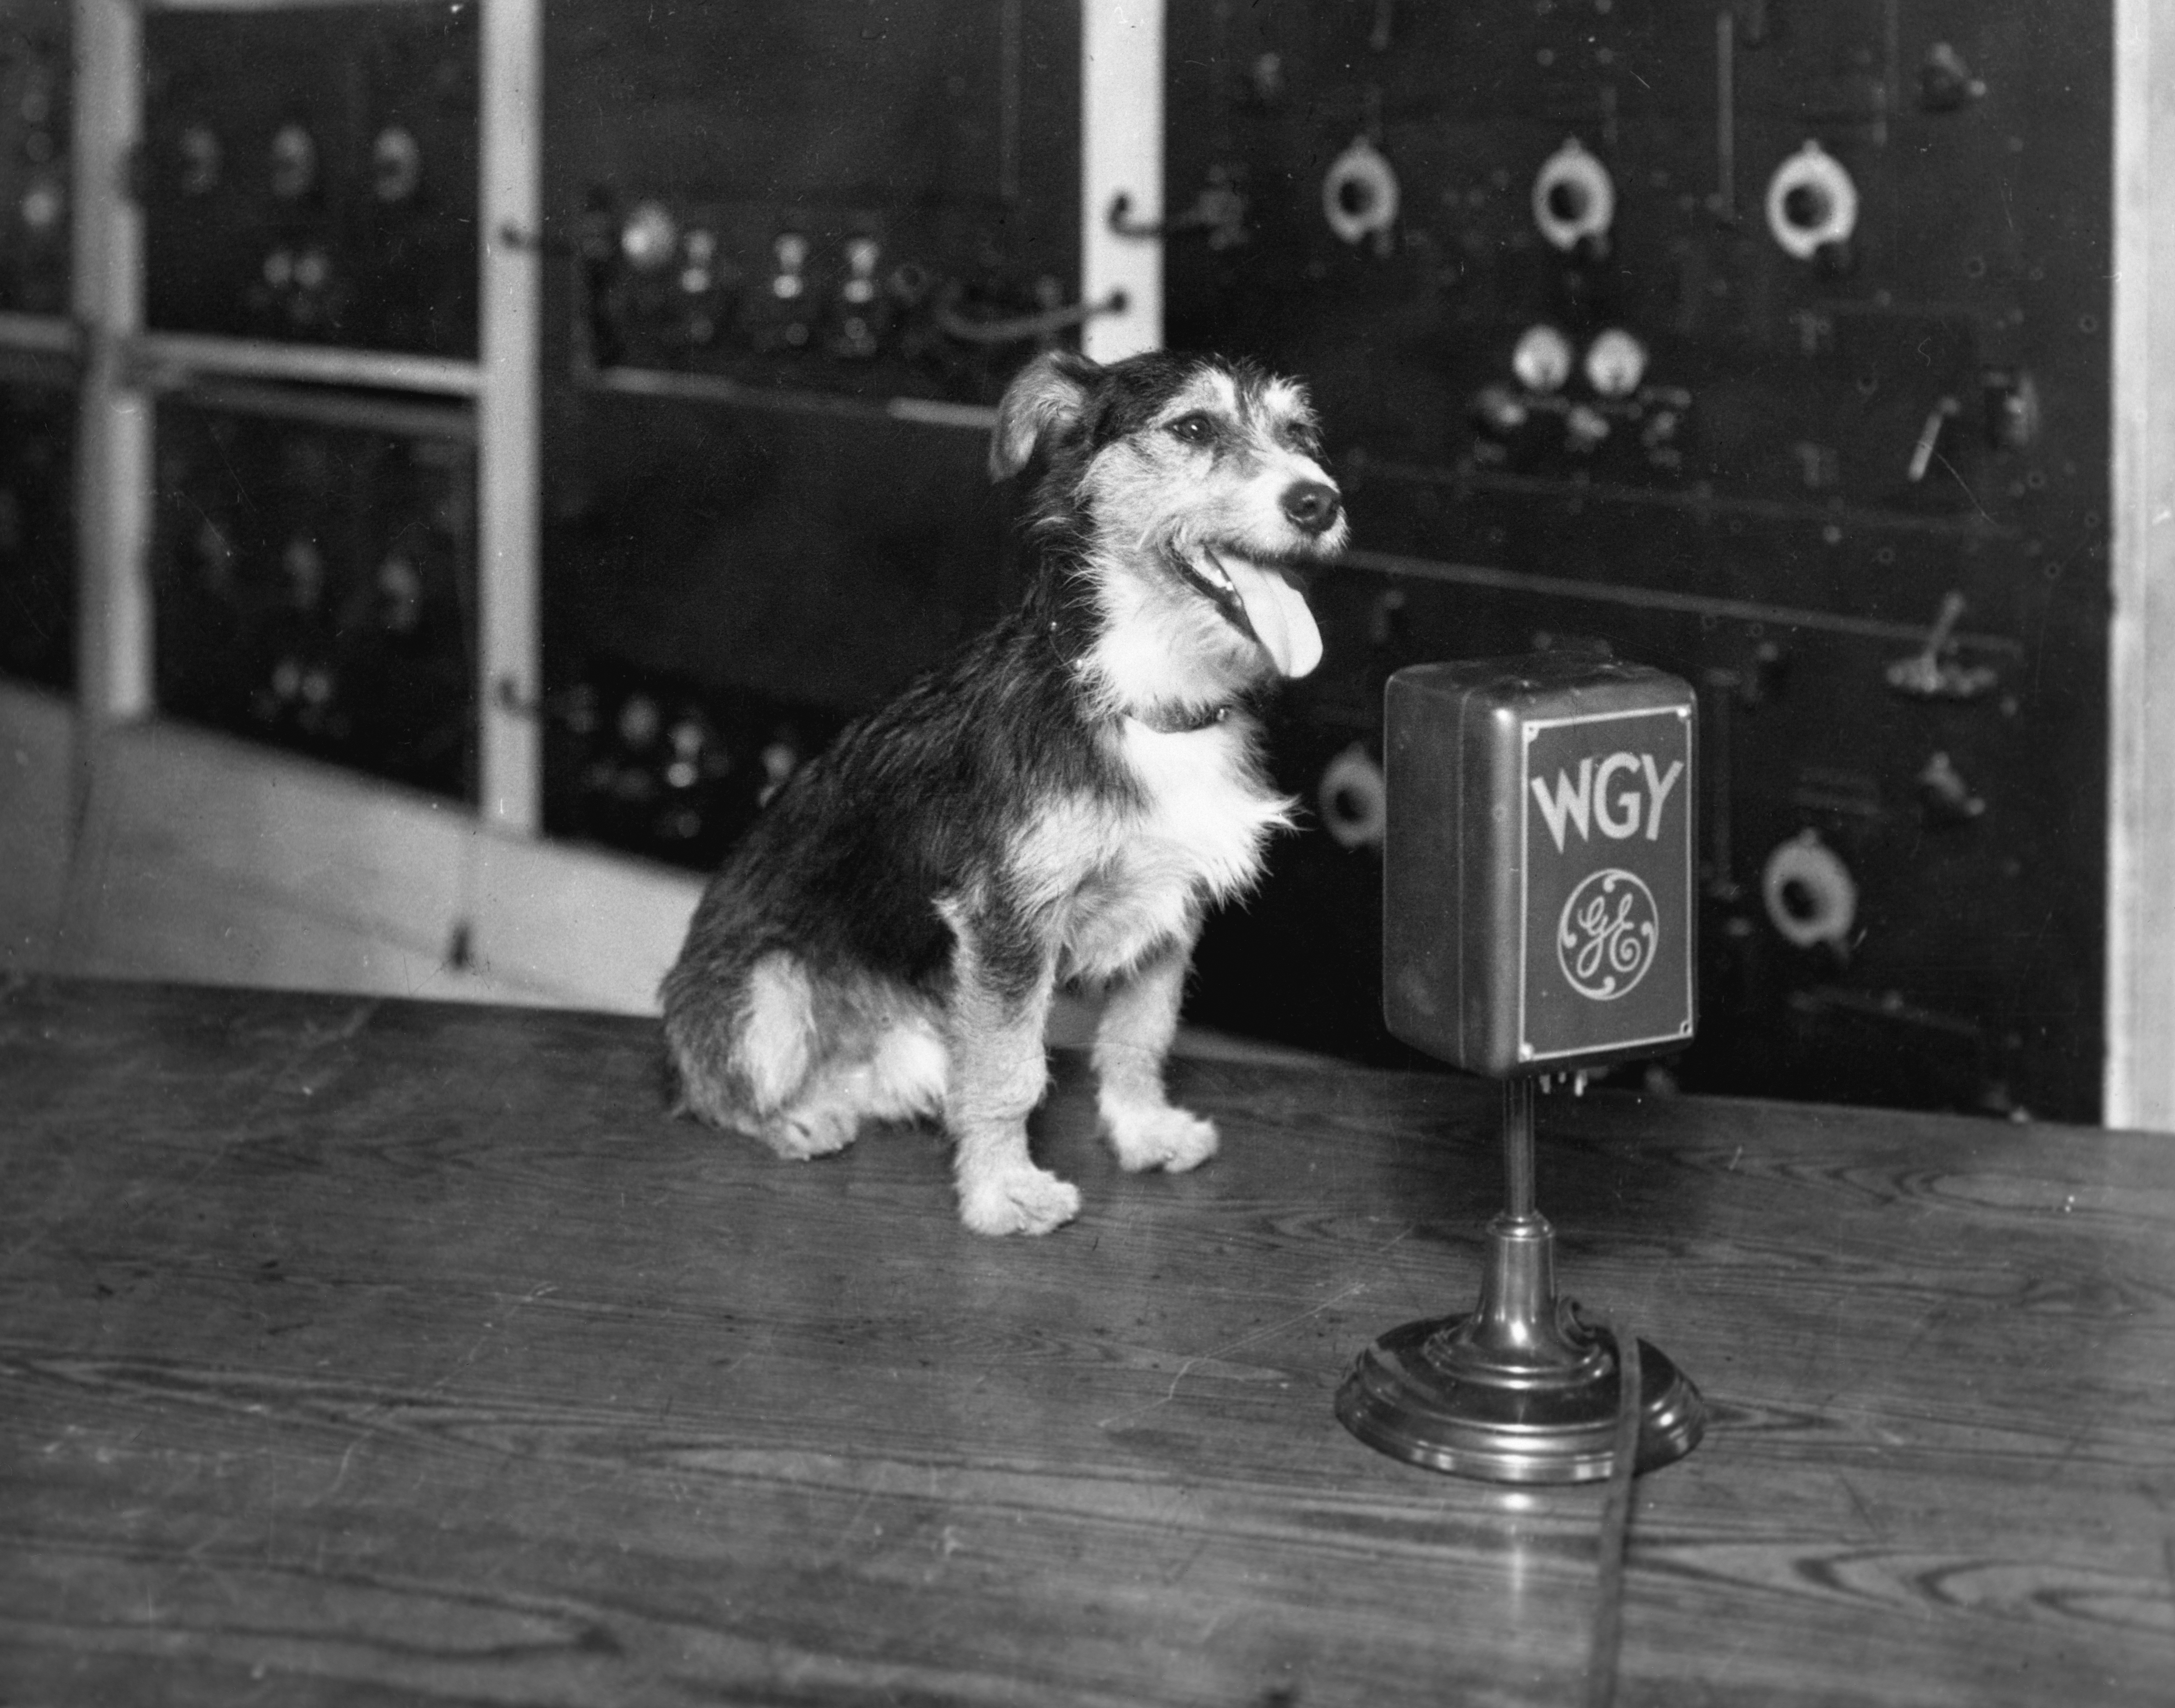 Dog at WGY Radio Microphone